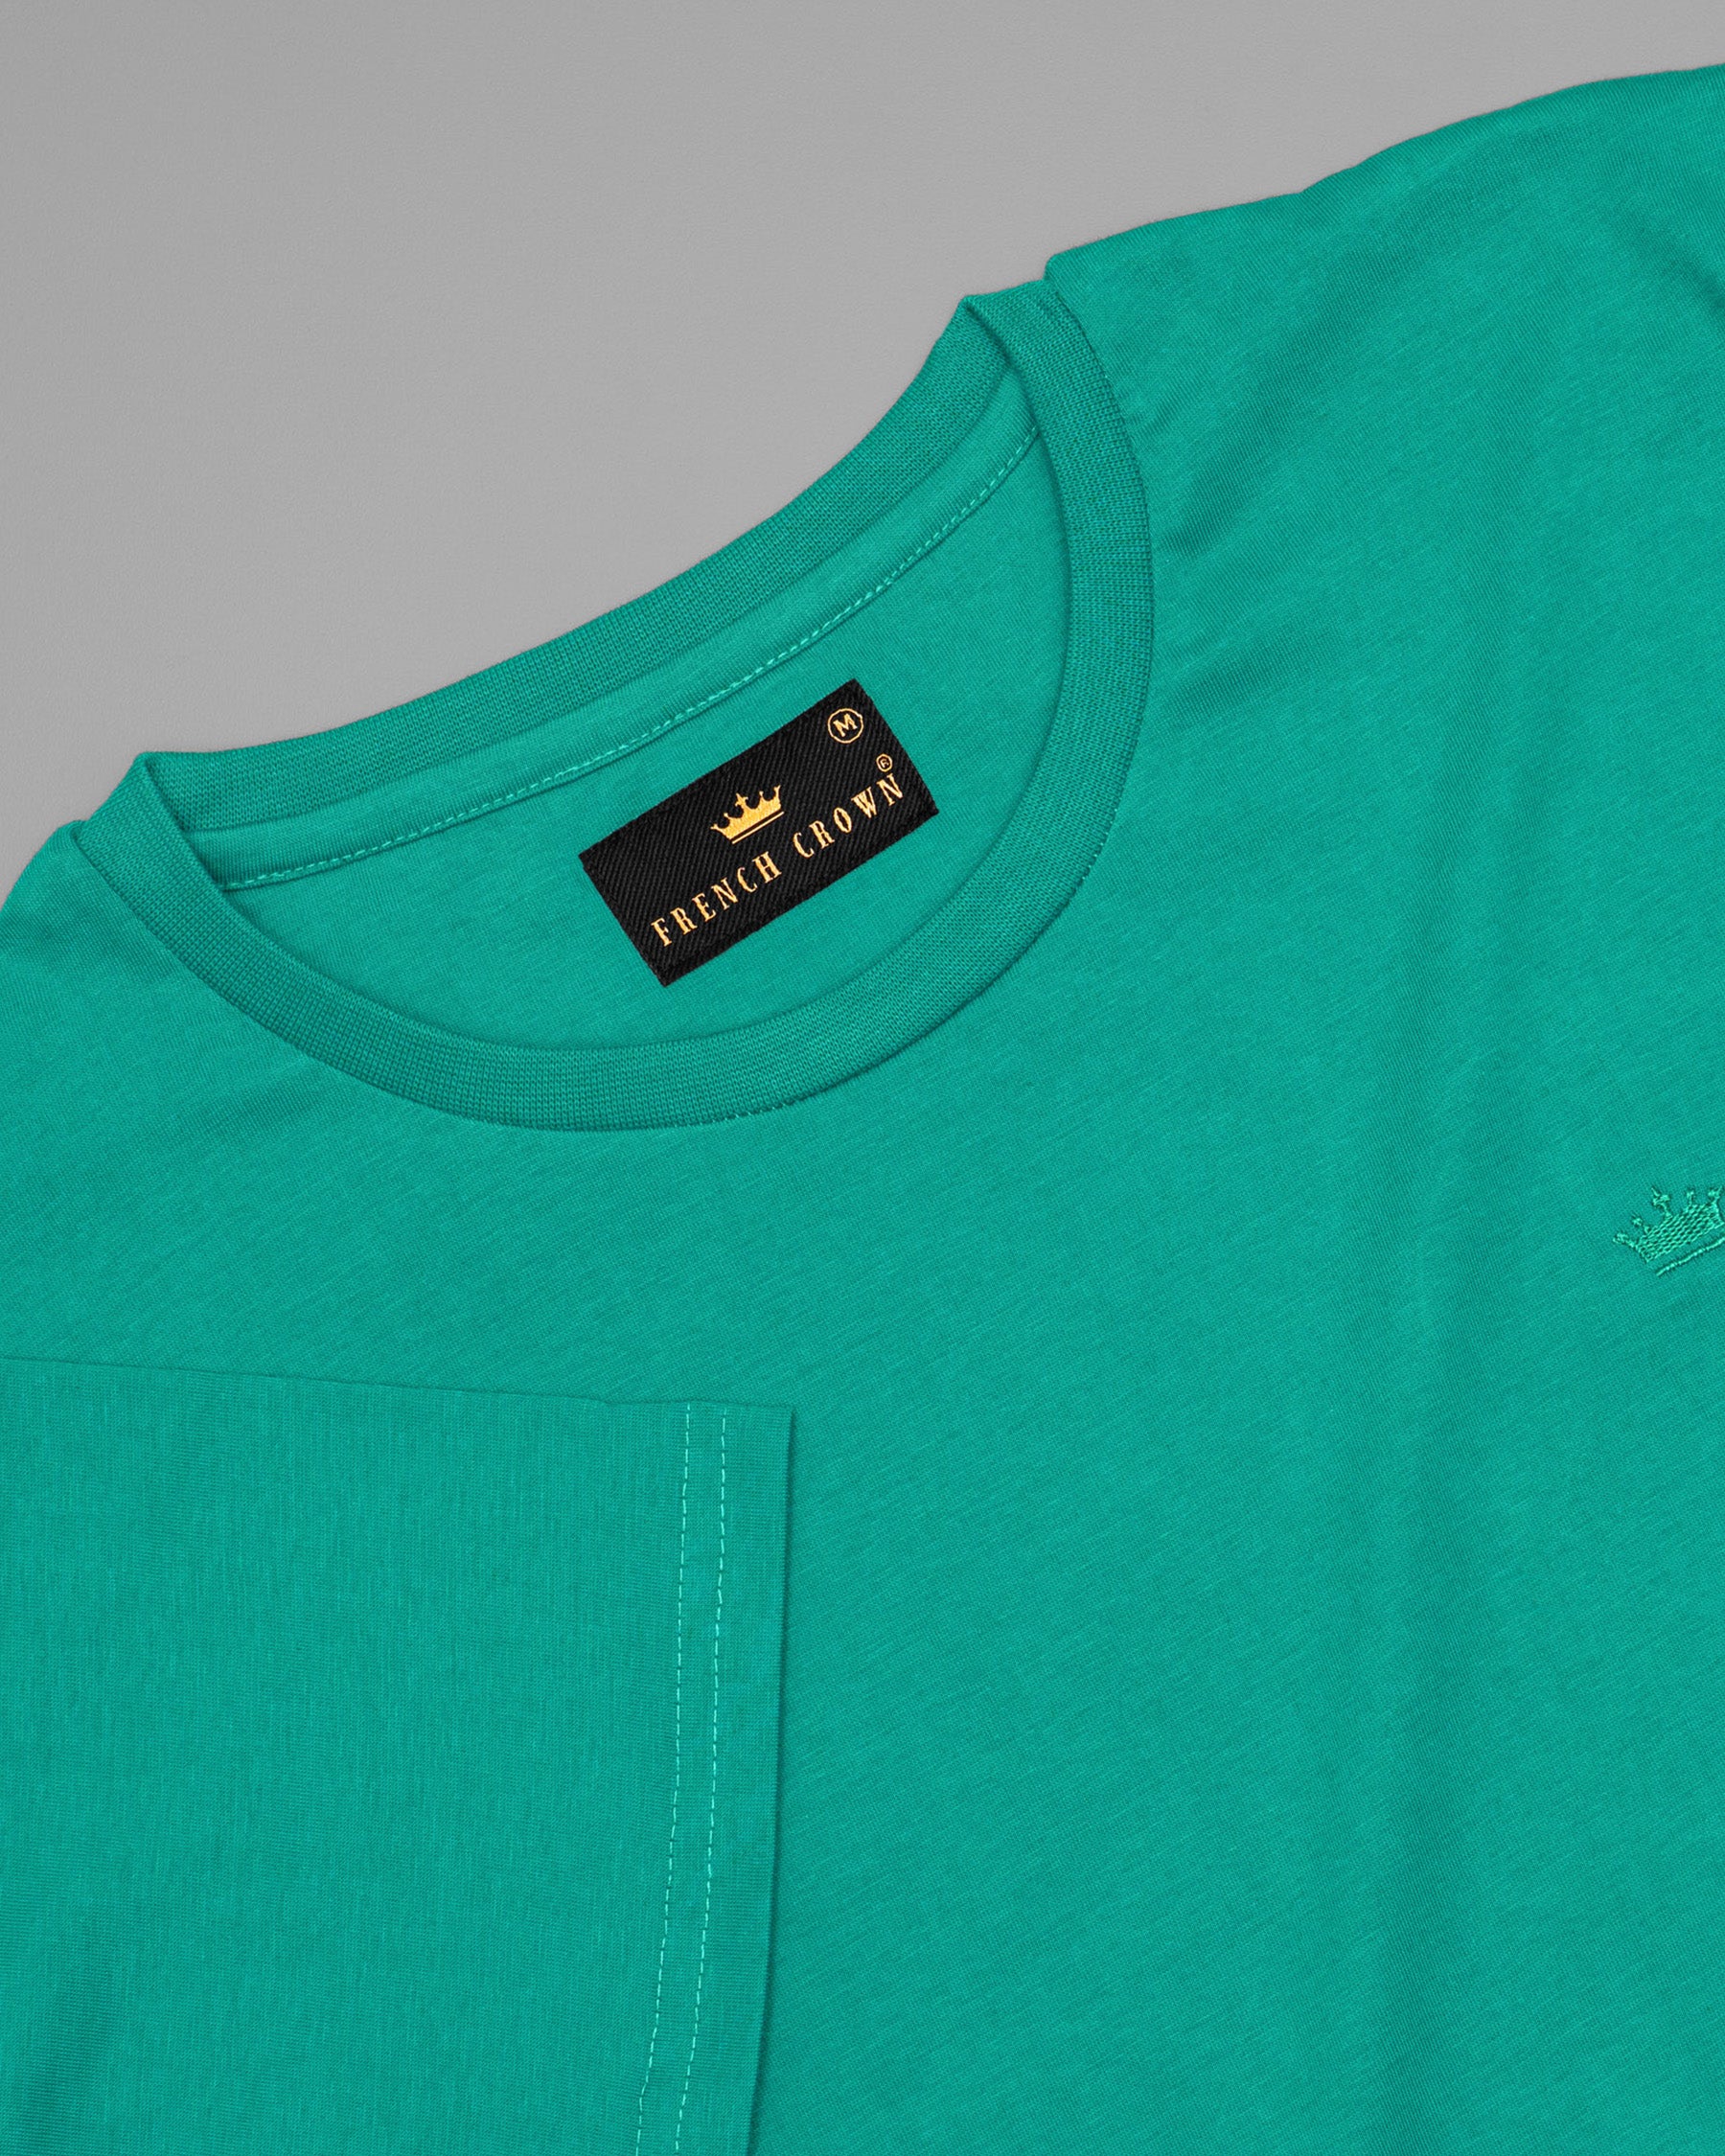 Sacramento Green Super Soft Premium Organic Cotton T-shirt TS074-S, TS074-L, TS074-XXL, TS074-M, TS074-XL